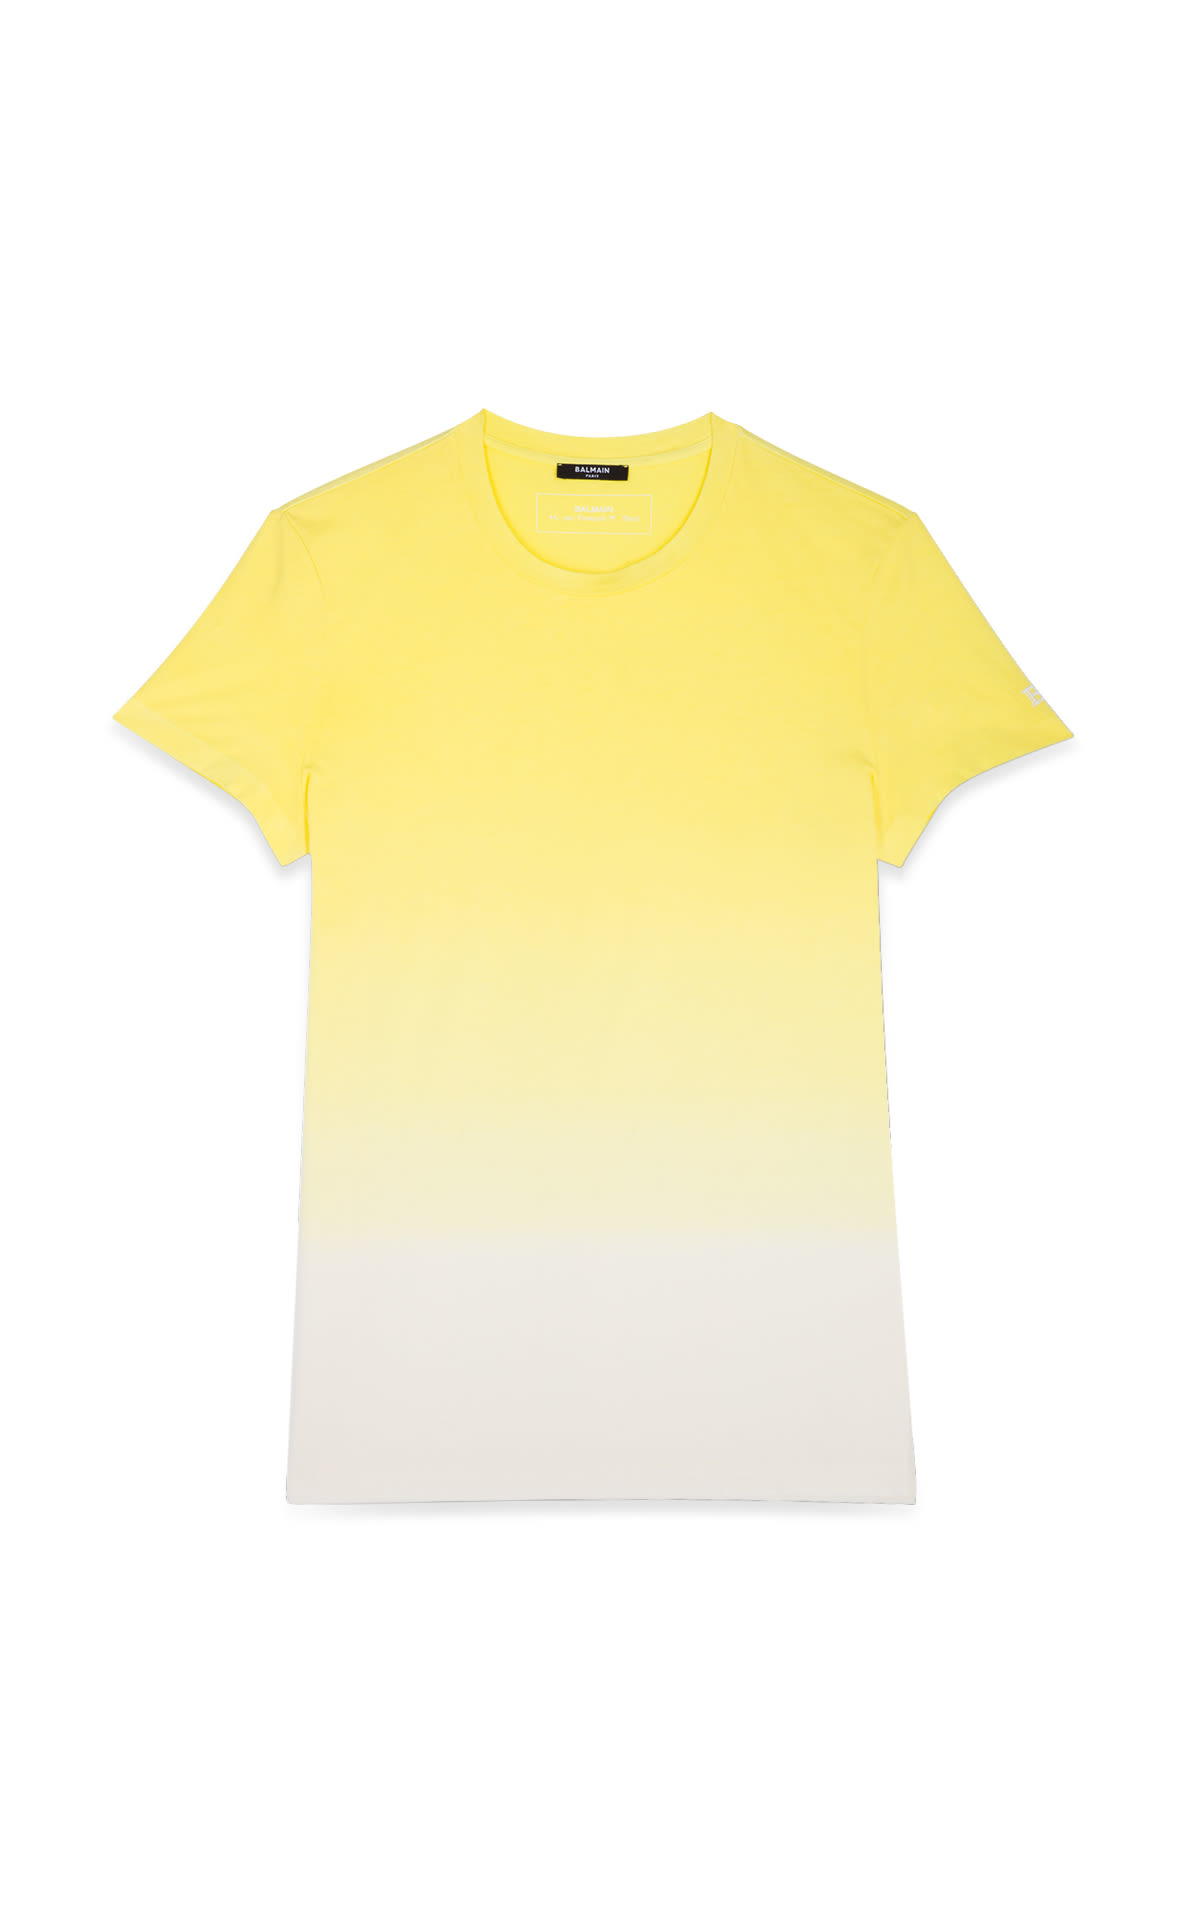 La Vallée Village Balmain t-shirt jaune